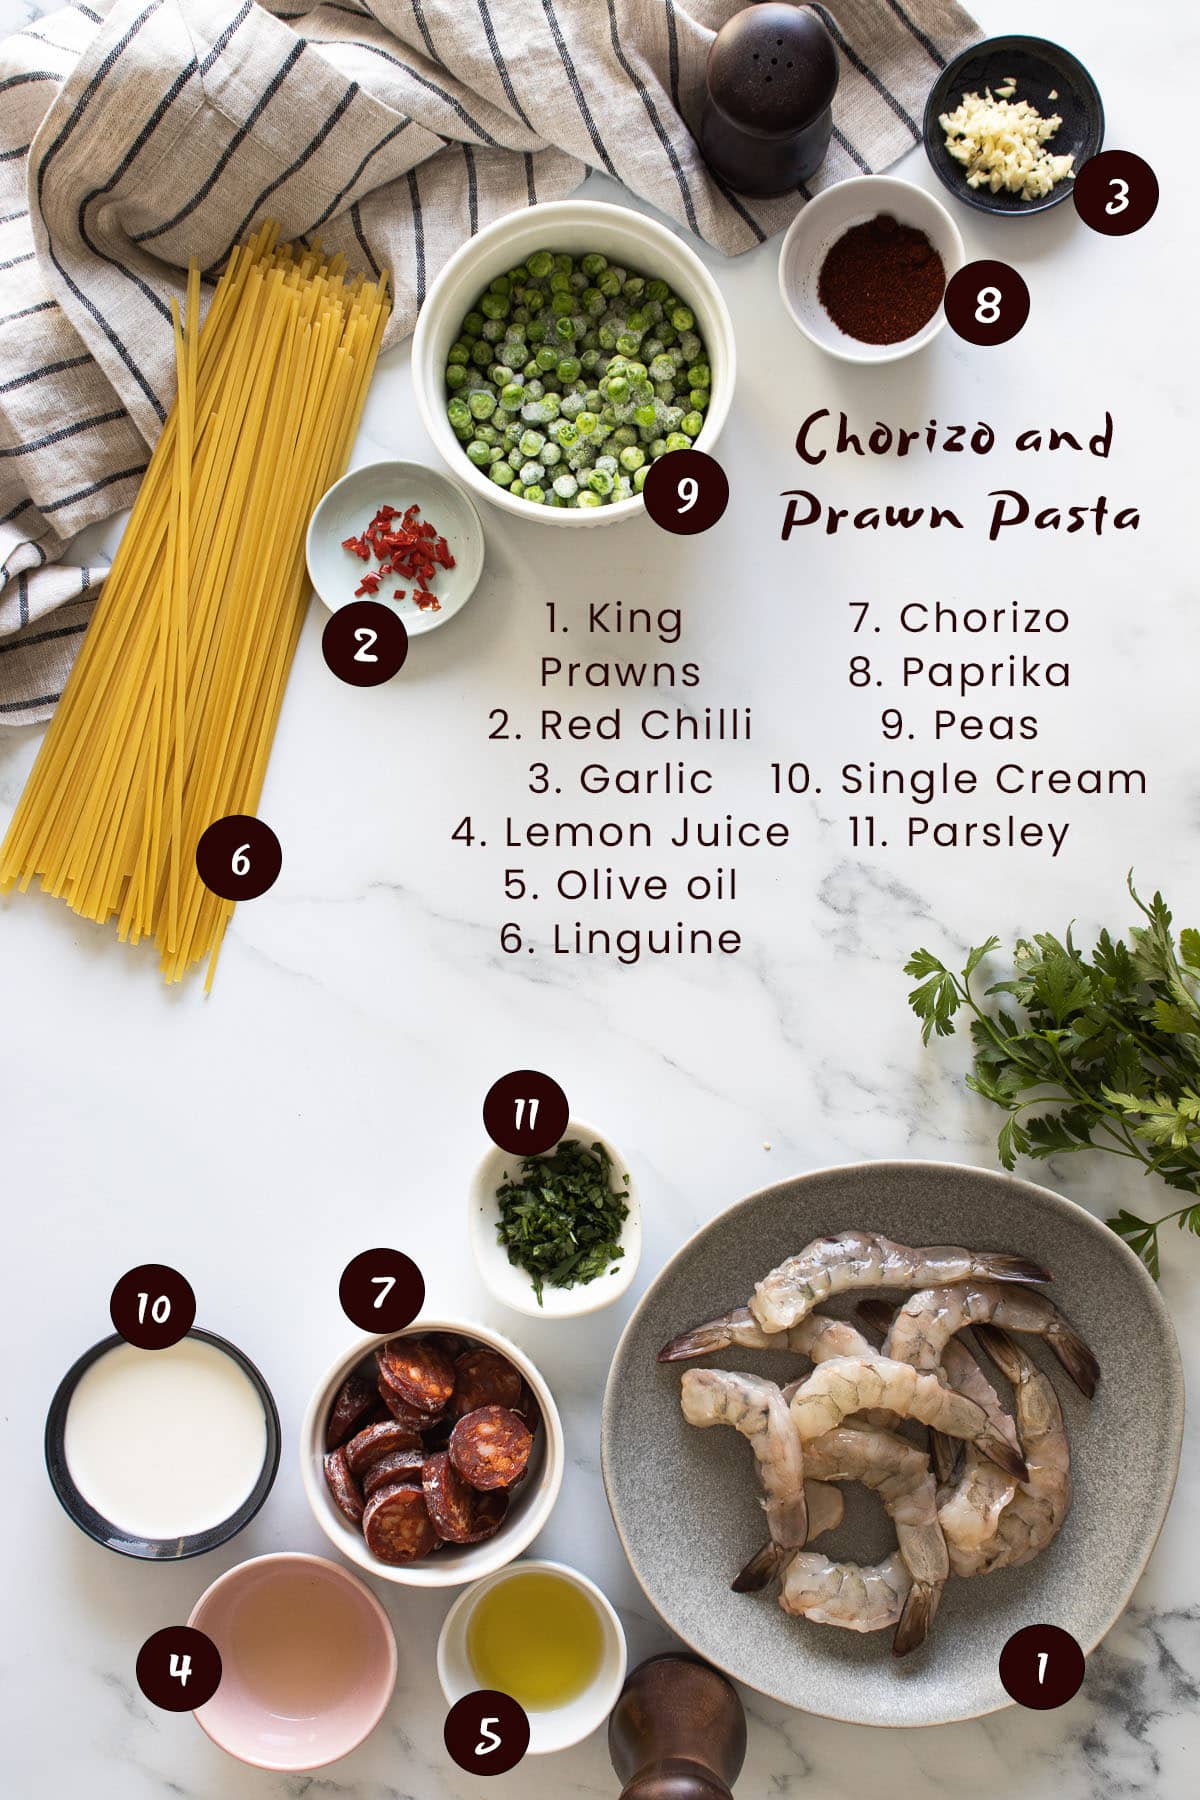 Chorizo and prawn pasta ingredients